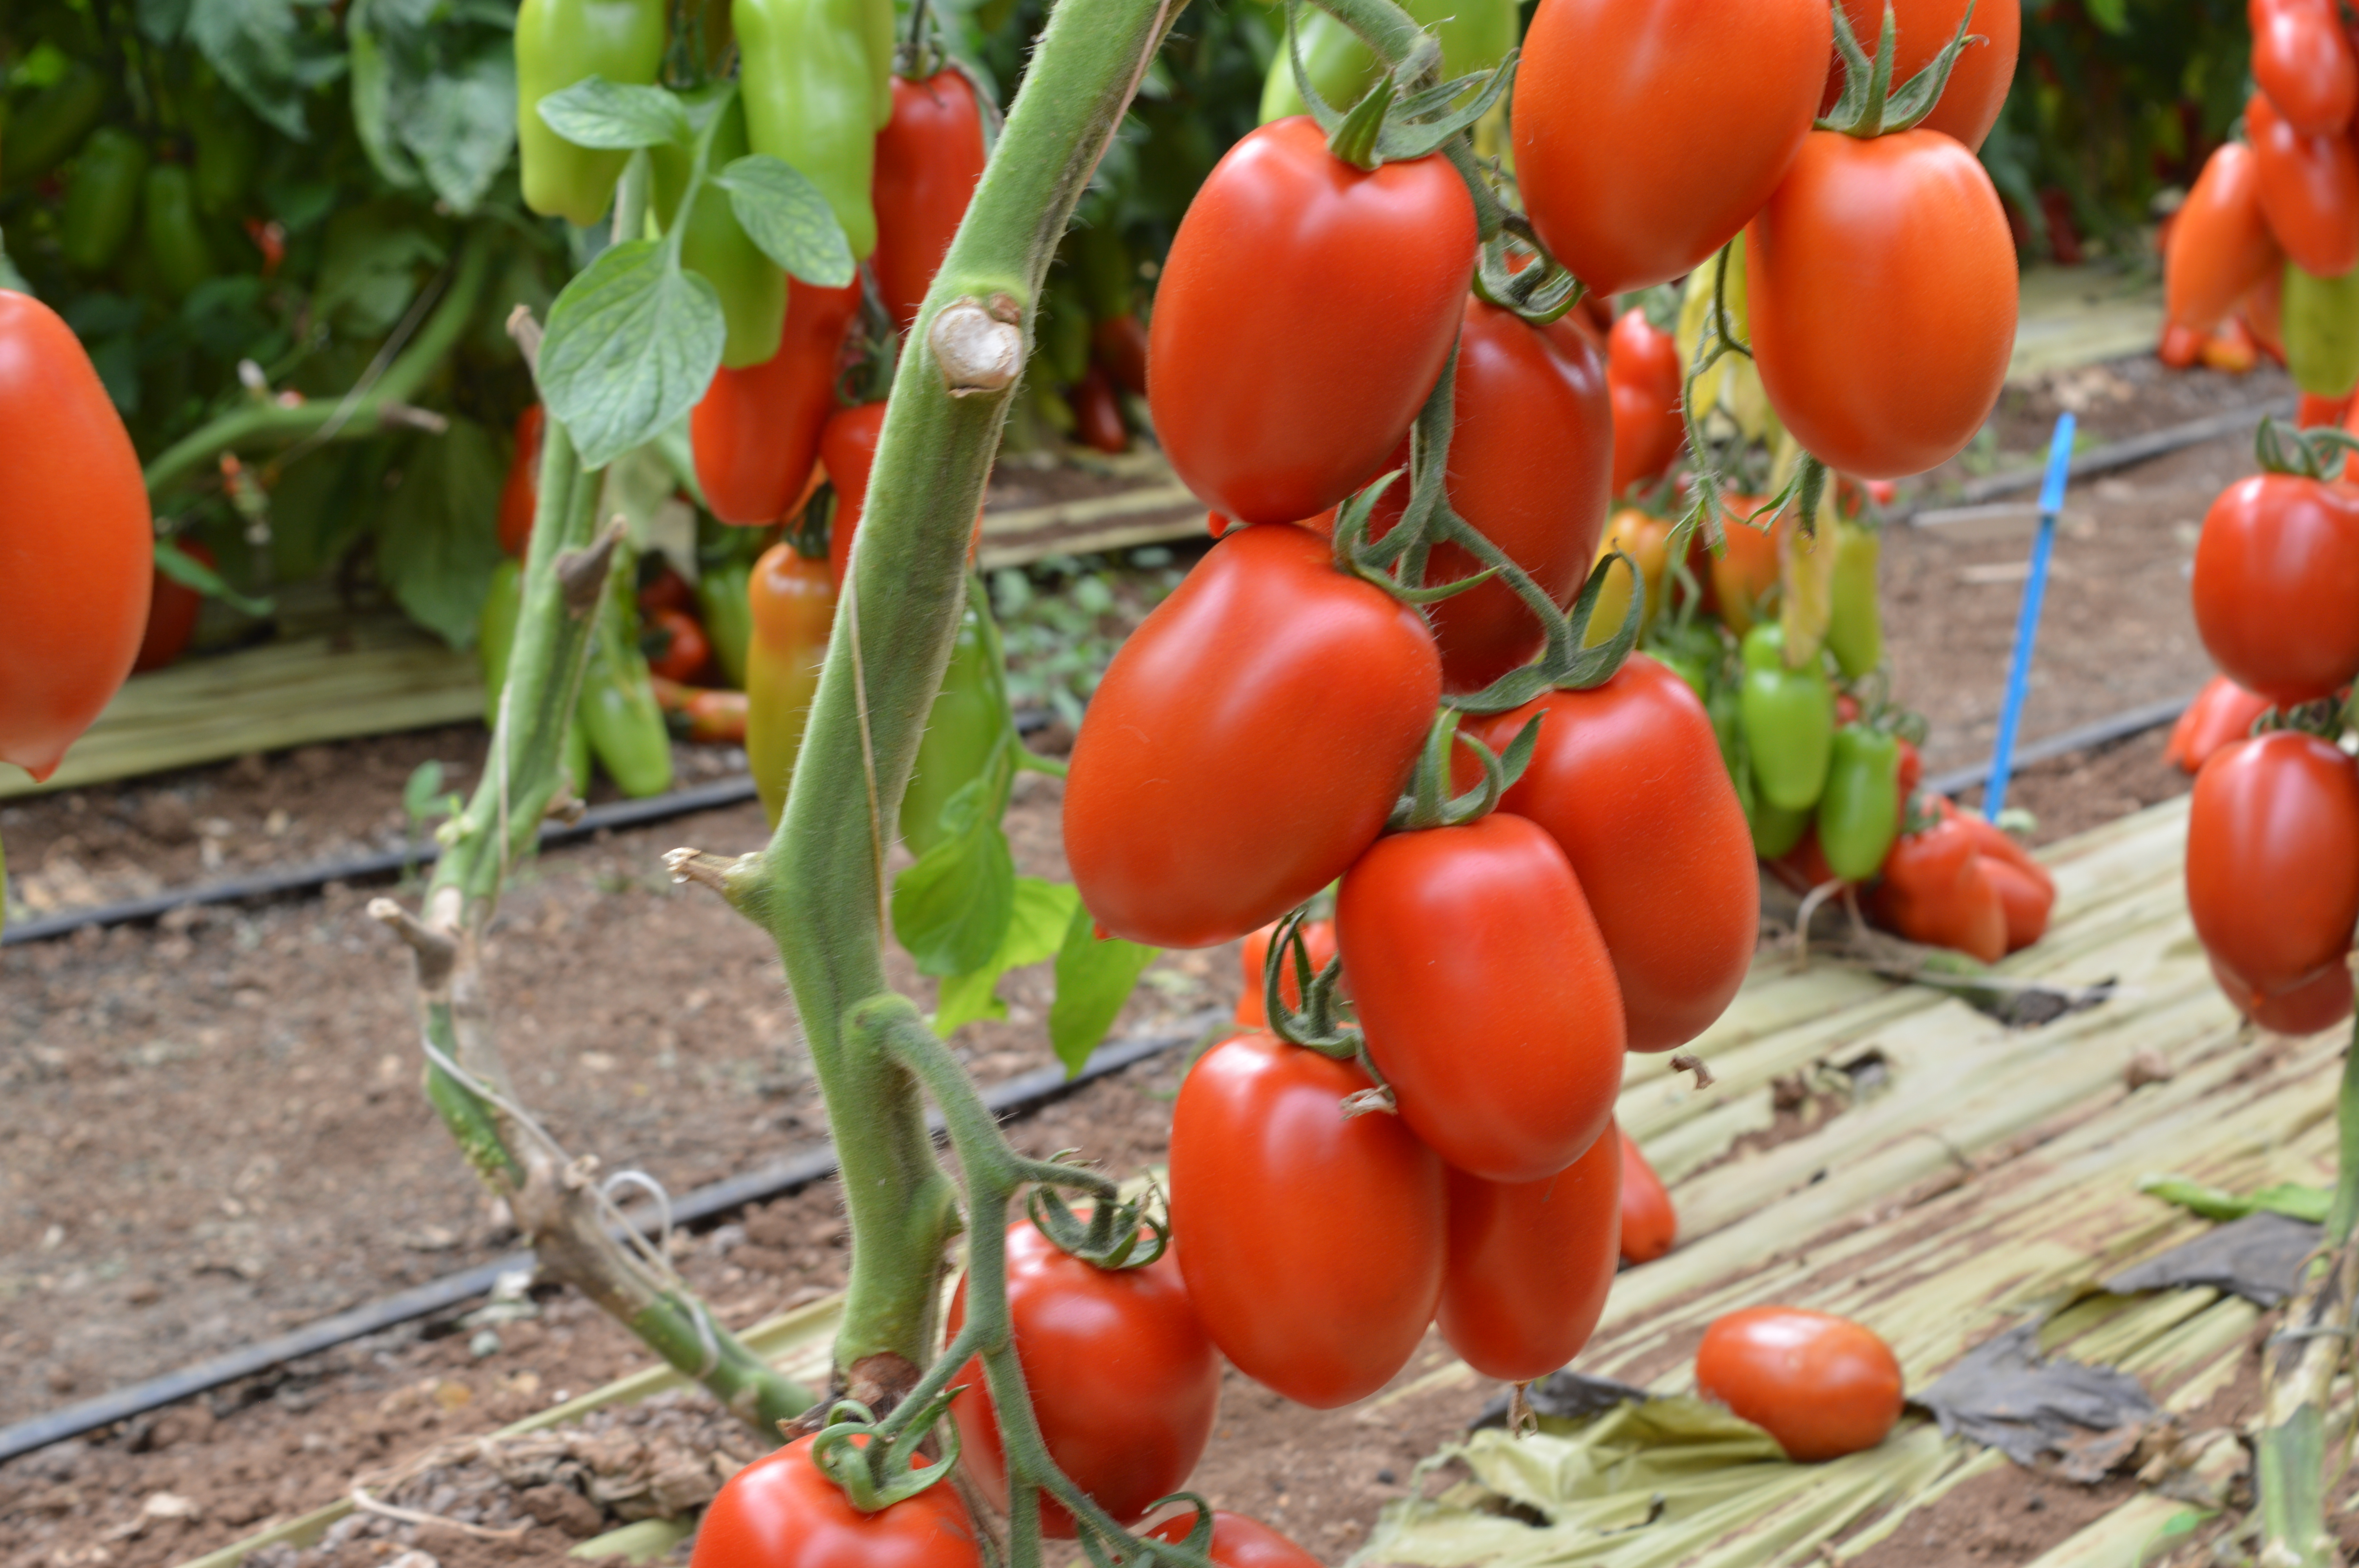 Malvia tomate